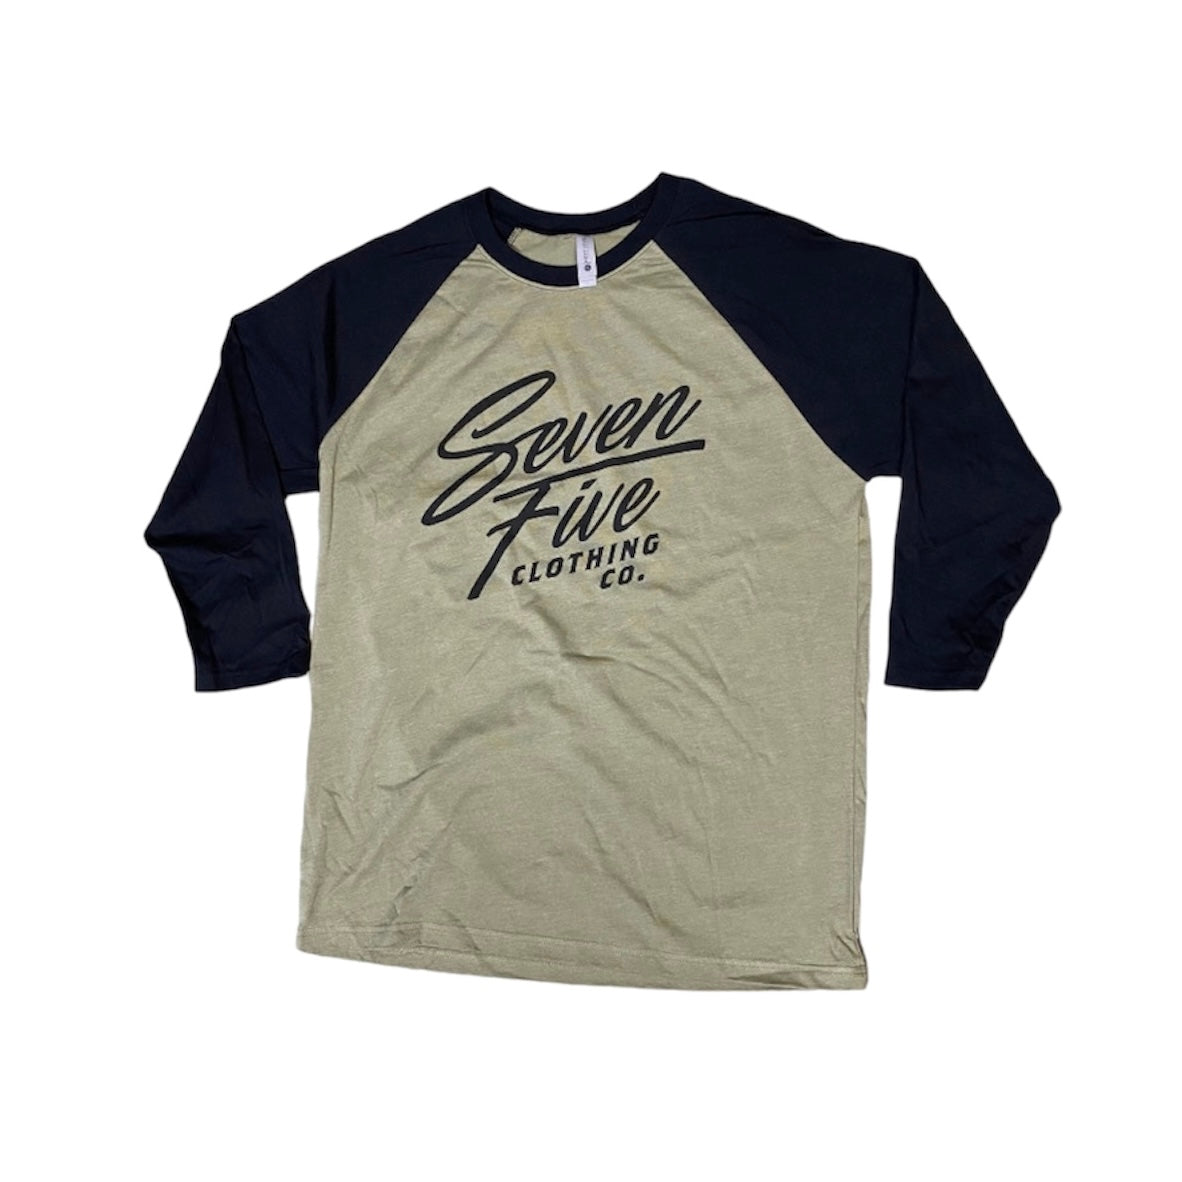 Seven Five Script Baseball tee - Mil Green/Black - 7Five Clothing Co.